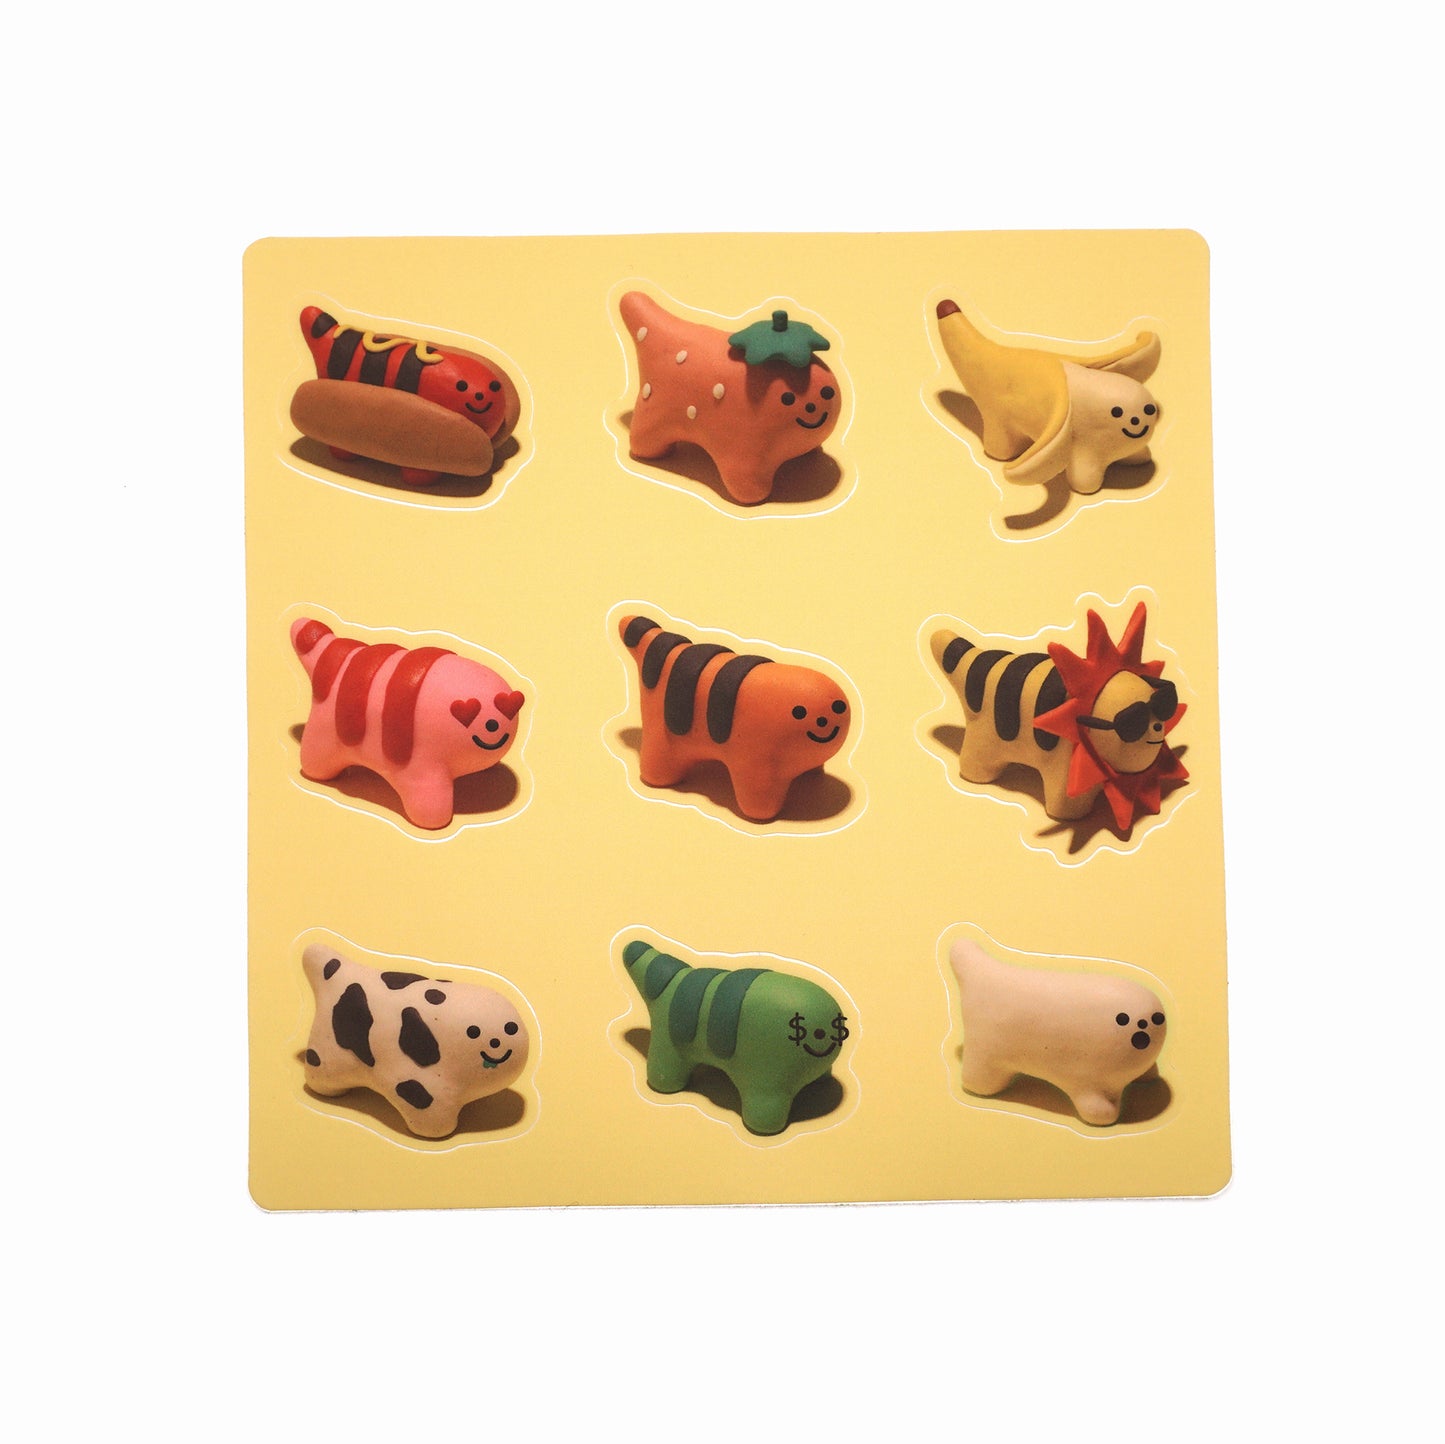 Clay Puff Tigers Sticker Sheet